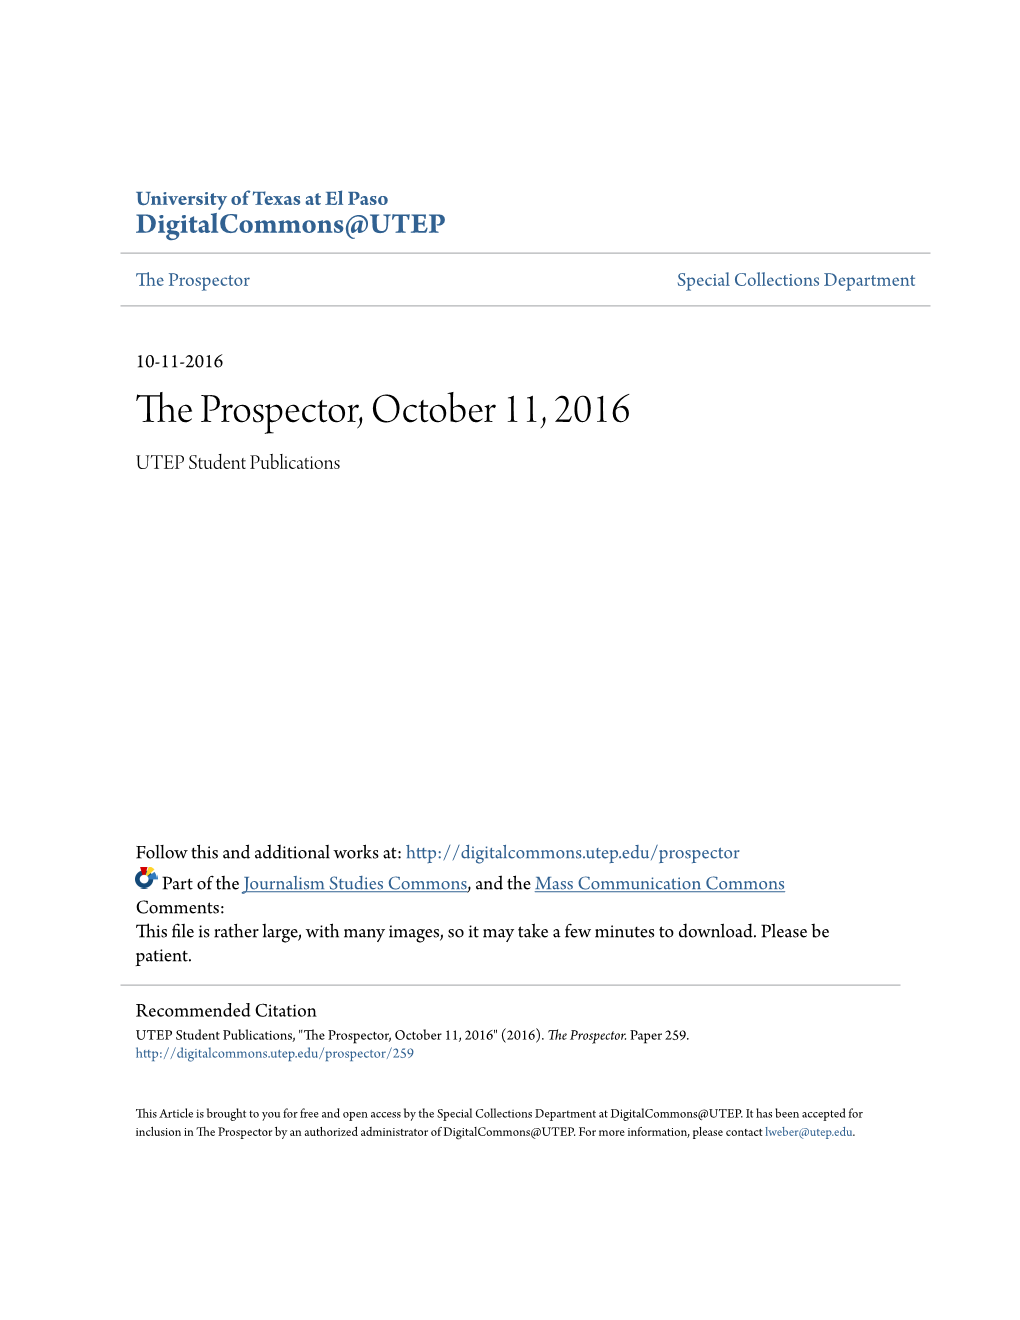 The Prospector, October 11, 2016